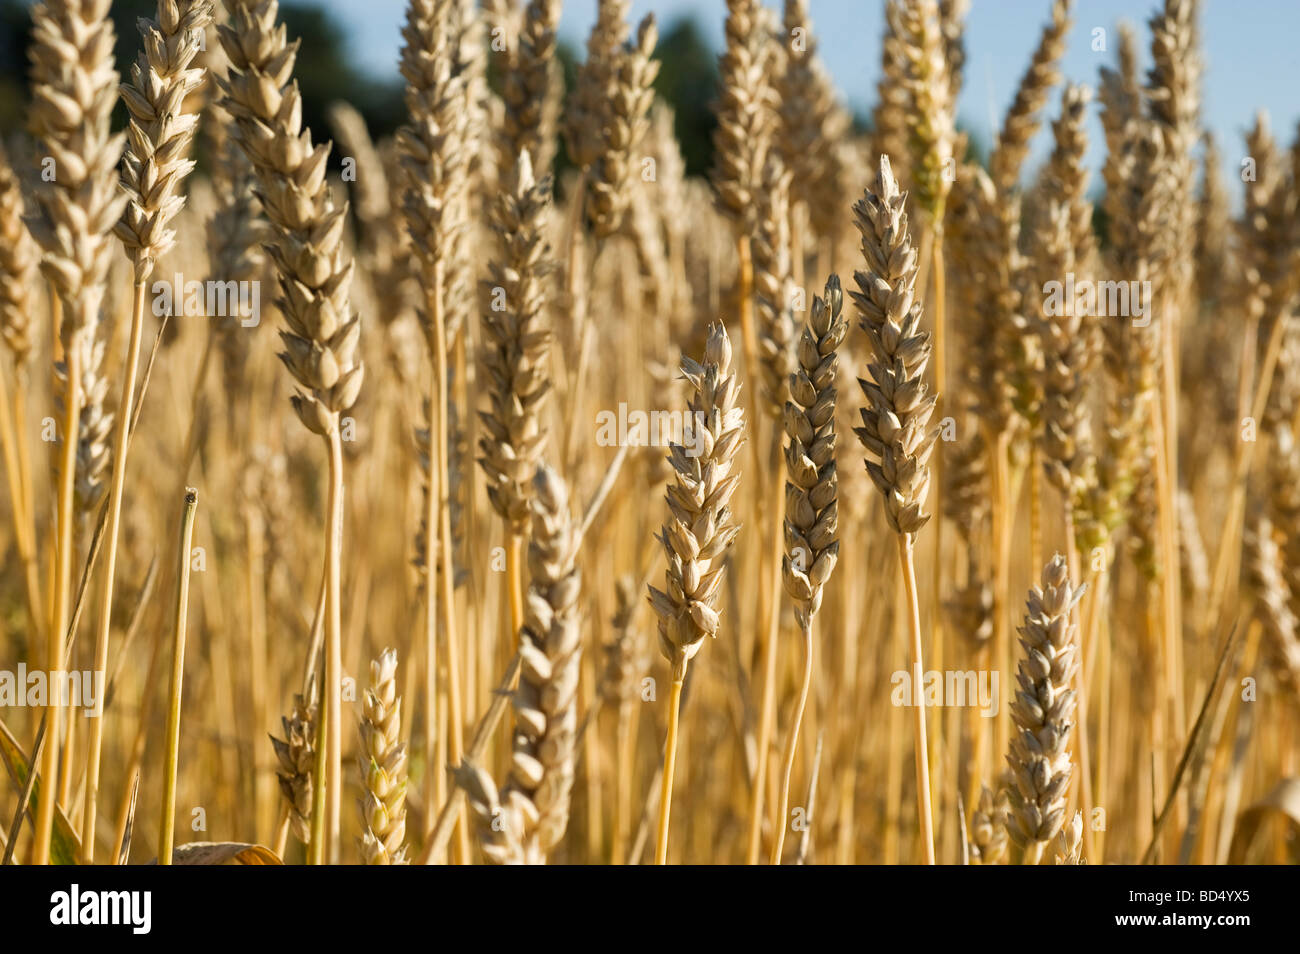 Wheat (Triticum aestivum) common food around the globe, Sweden Stock Photo